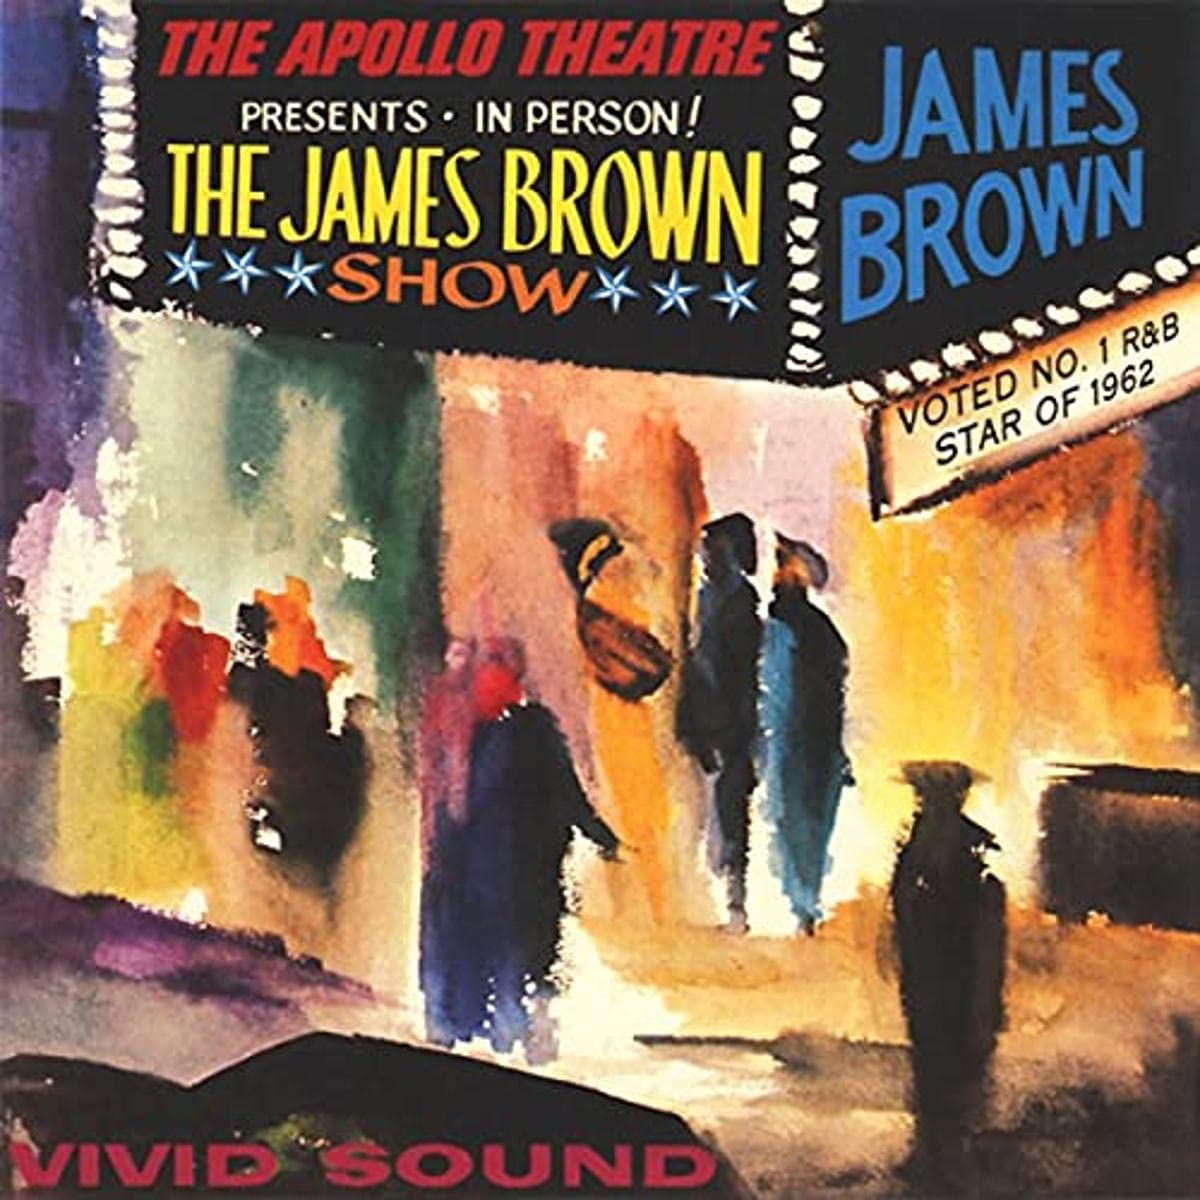 James Brown "Live at the Apollo" LP